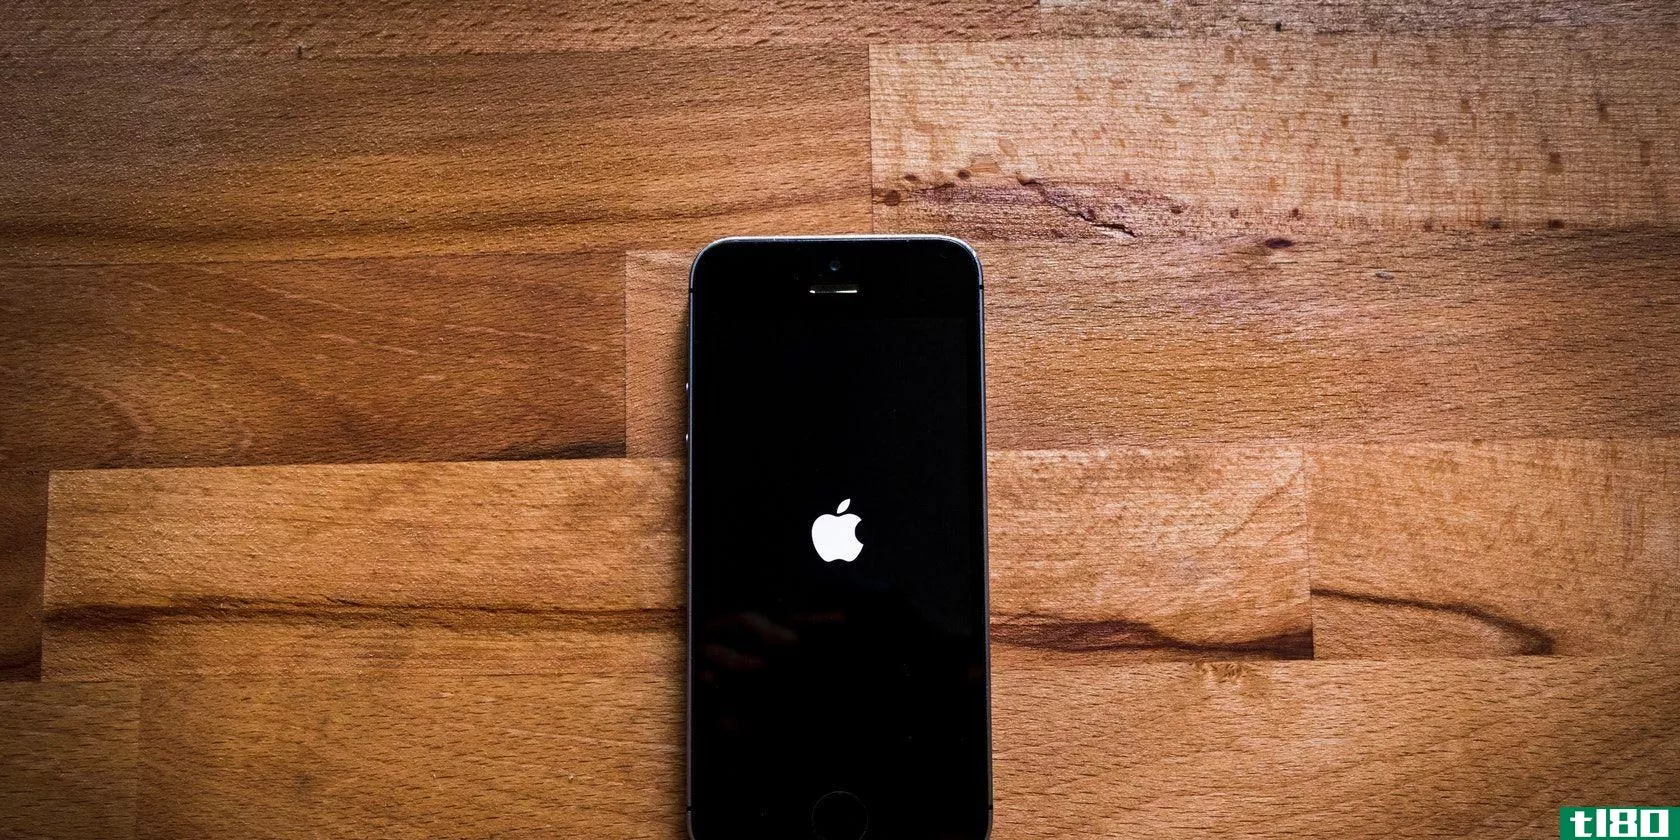 iPhone stuck in apple logo